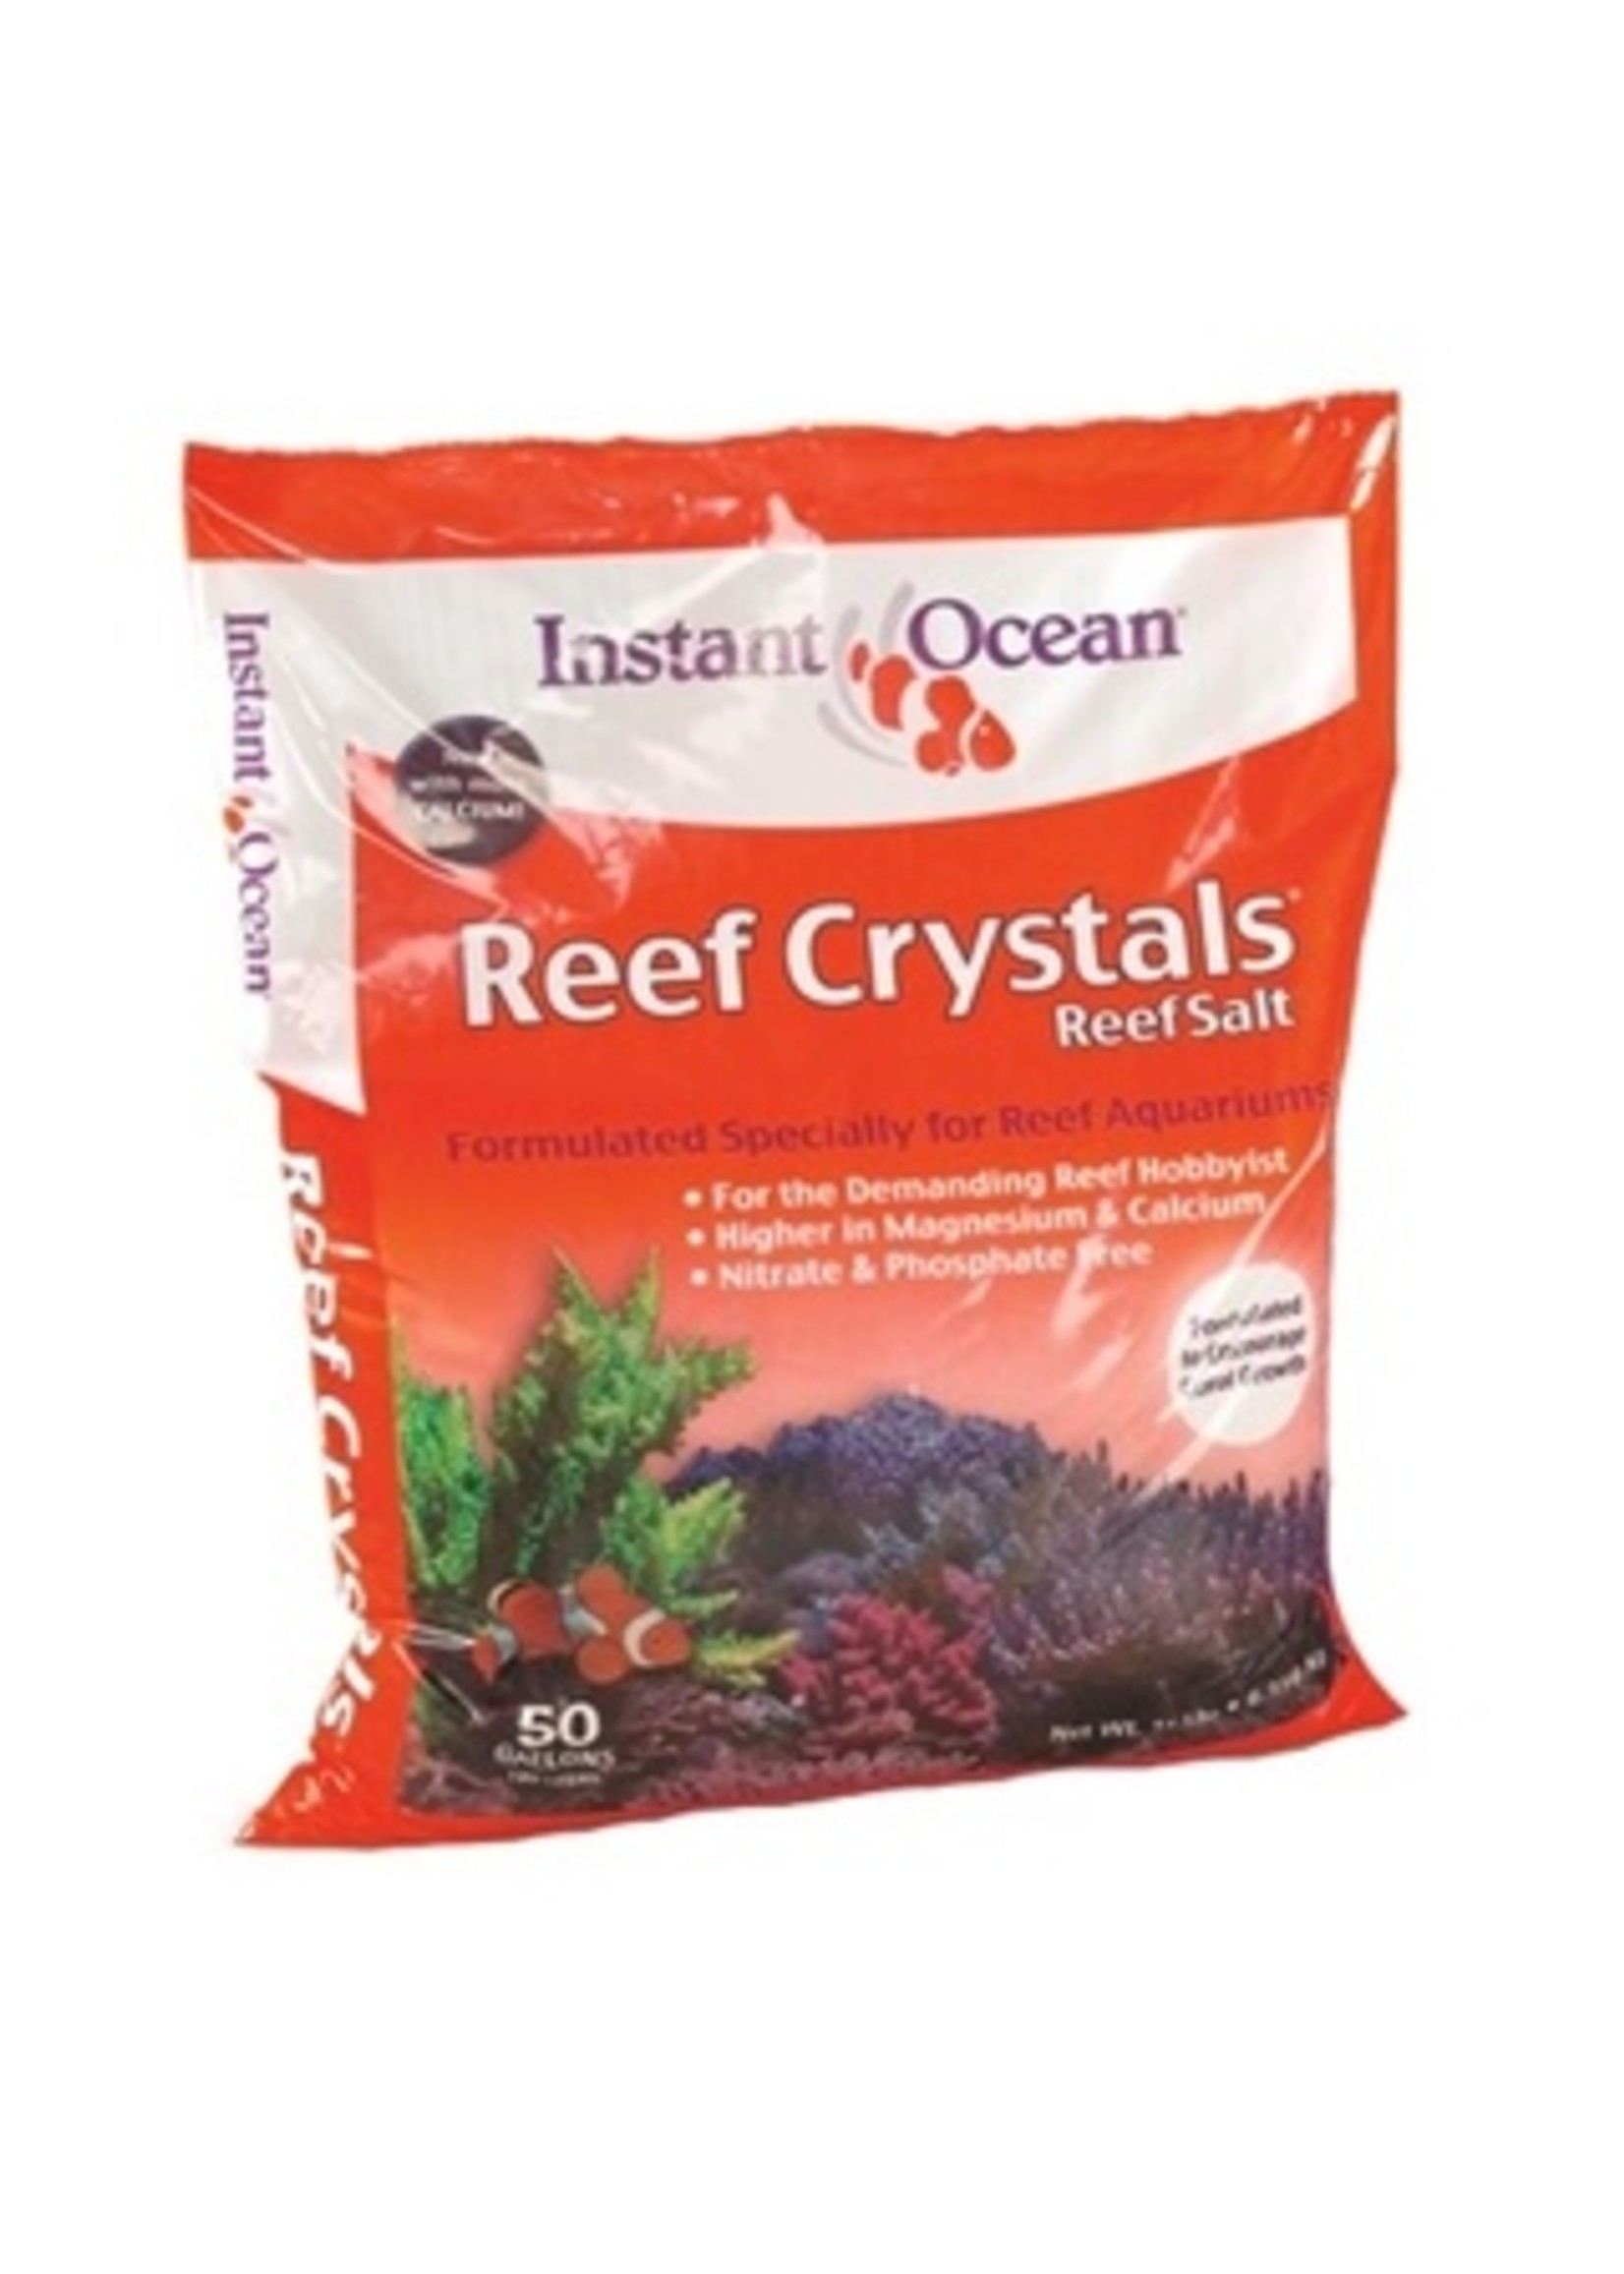 SPECTRUM BRANDS - AQUARIUM SYSTEMS Instant Ocean Reef Crystals Salt 50 Gallon Bag